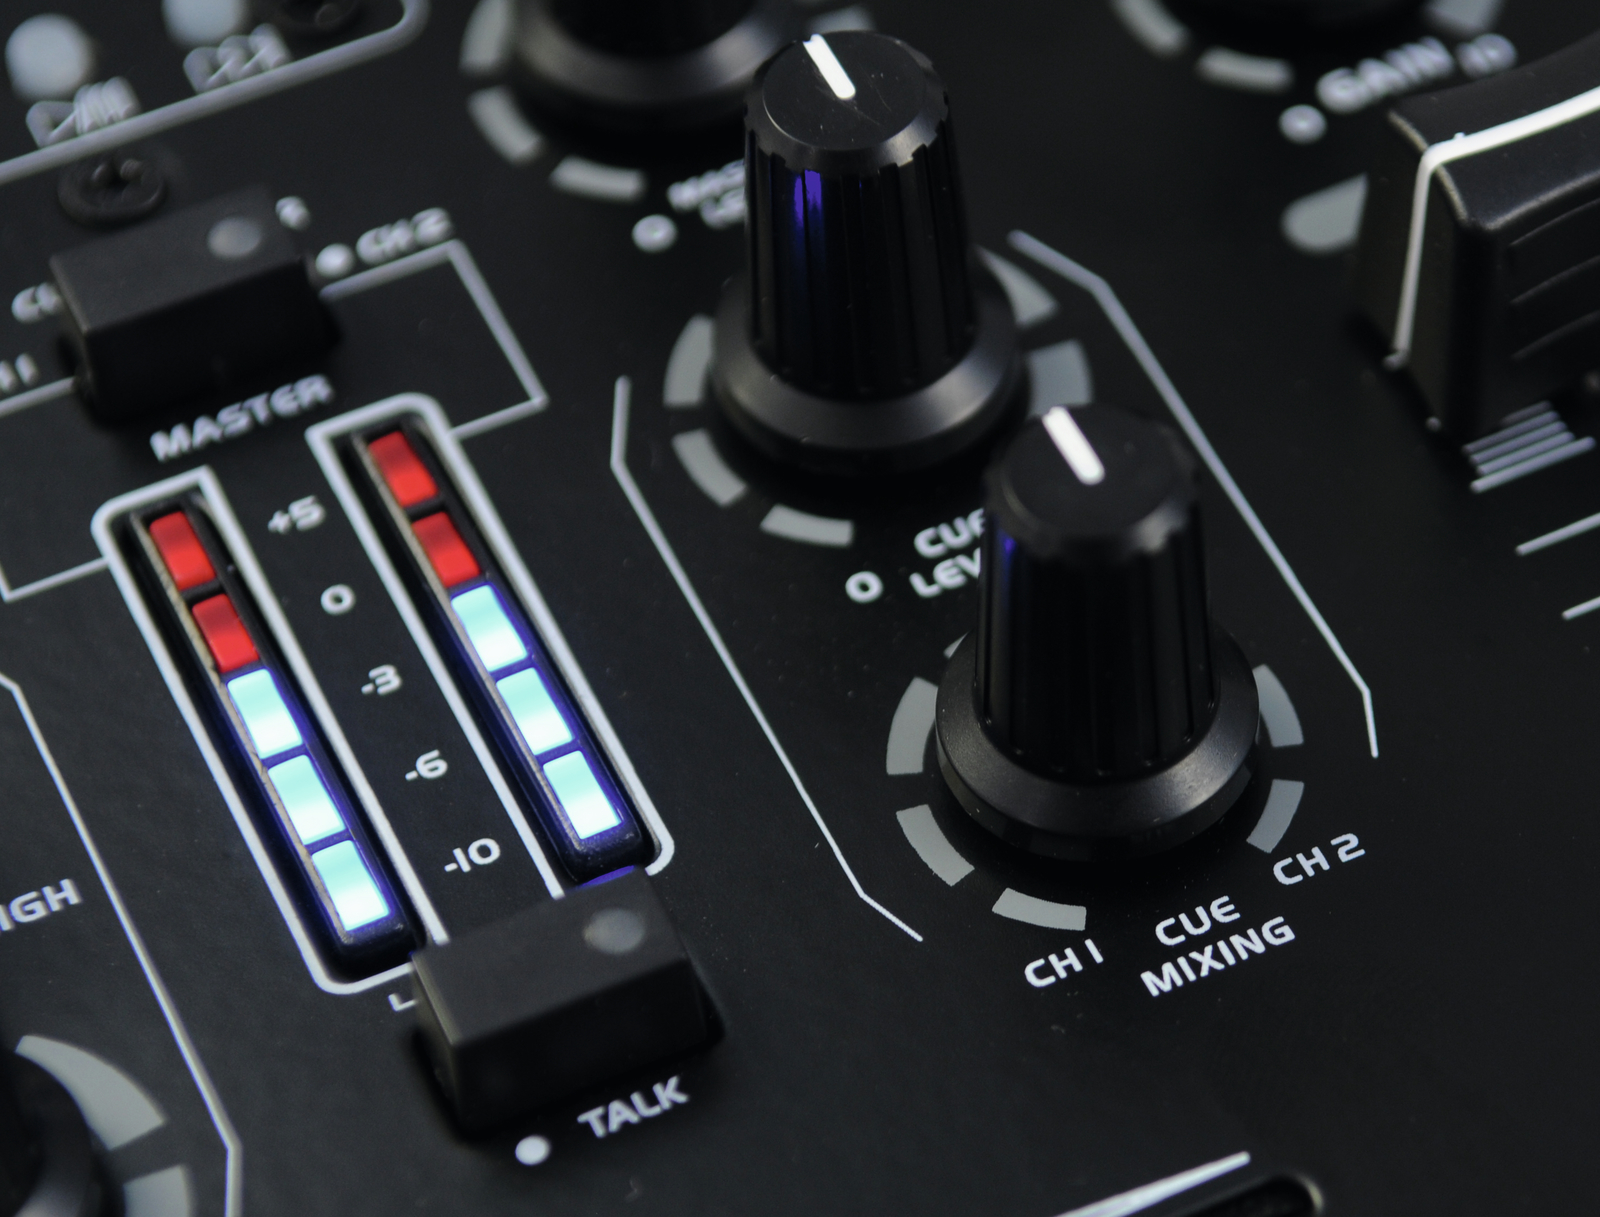 OMNITRONIC PM-211P DJ-Mixer mit Player